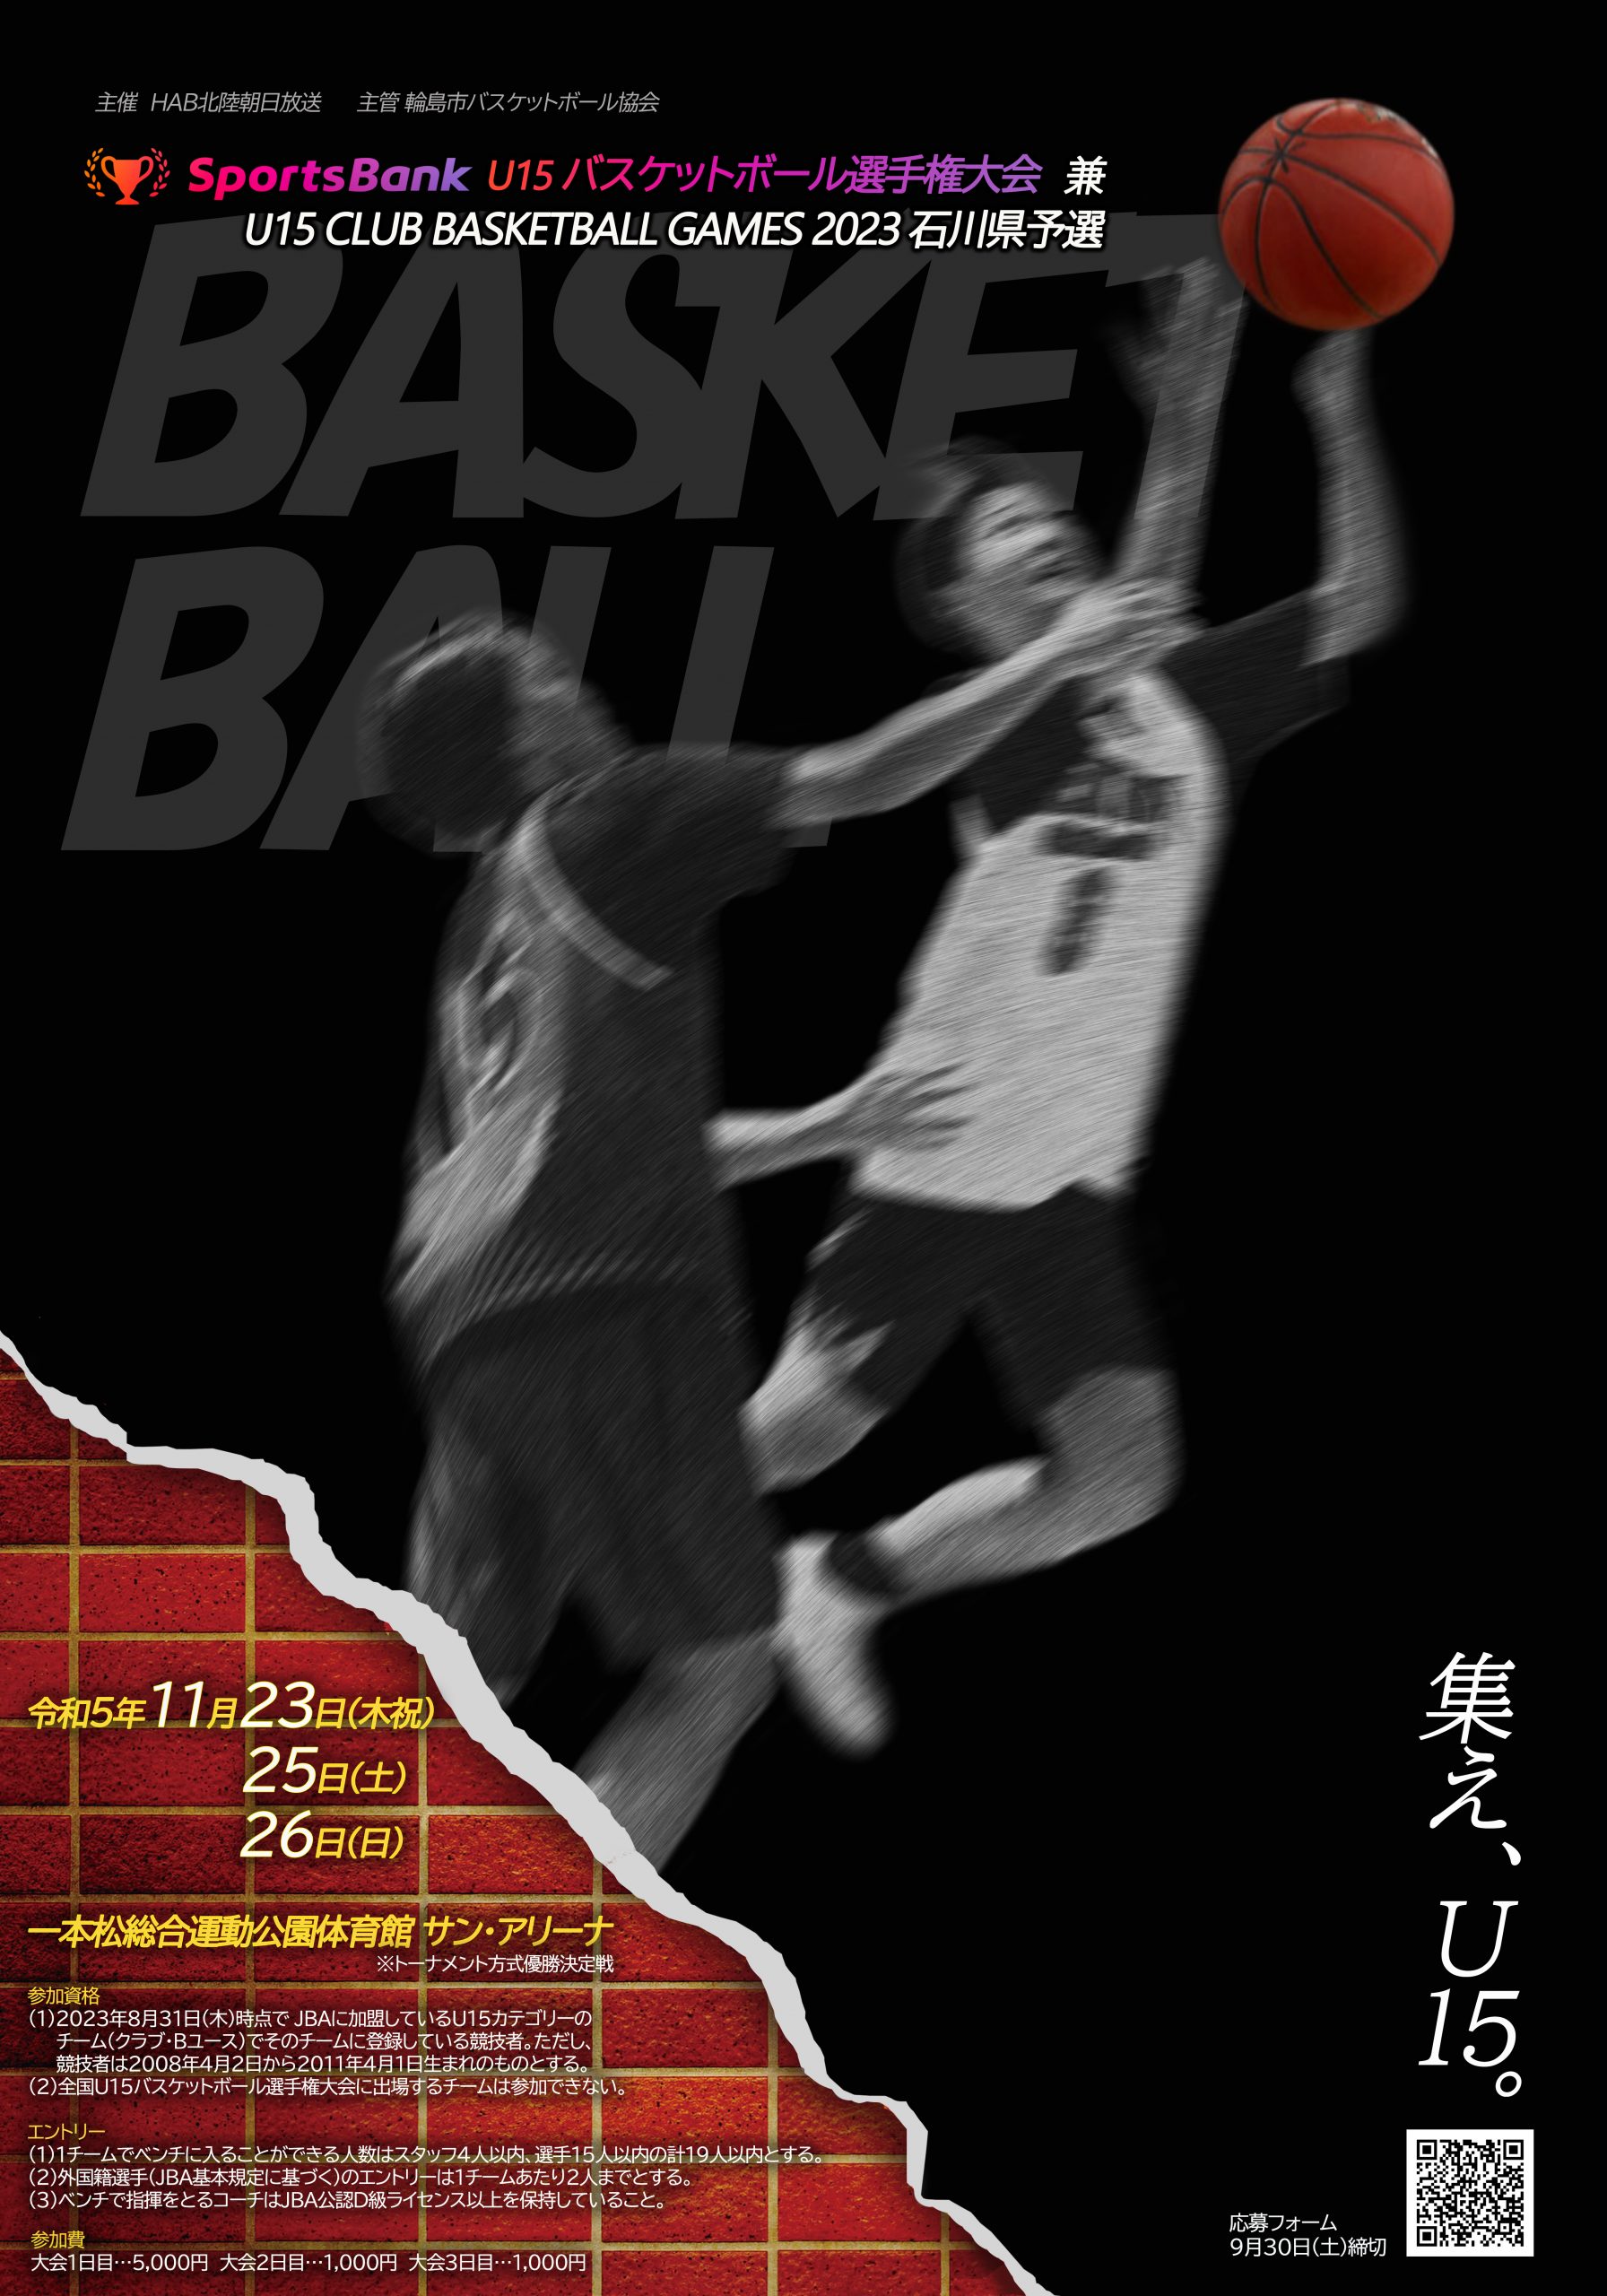 SportsBank U15バスケットボール選手権大会 兼 U15 CLUB BASKETBALL GAMES 2023 石川県予選